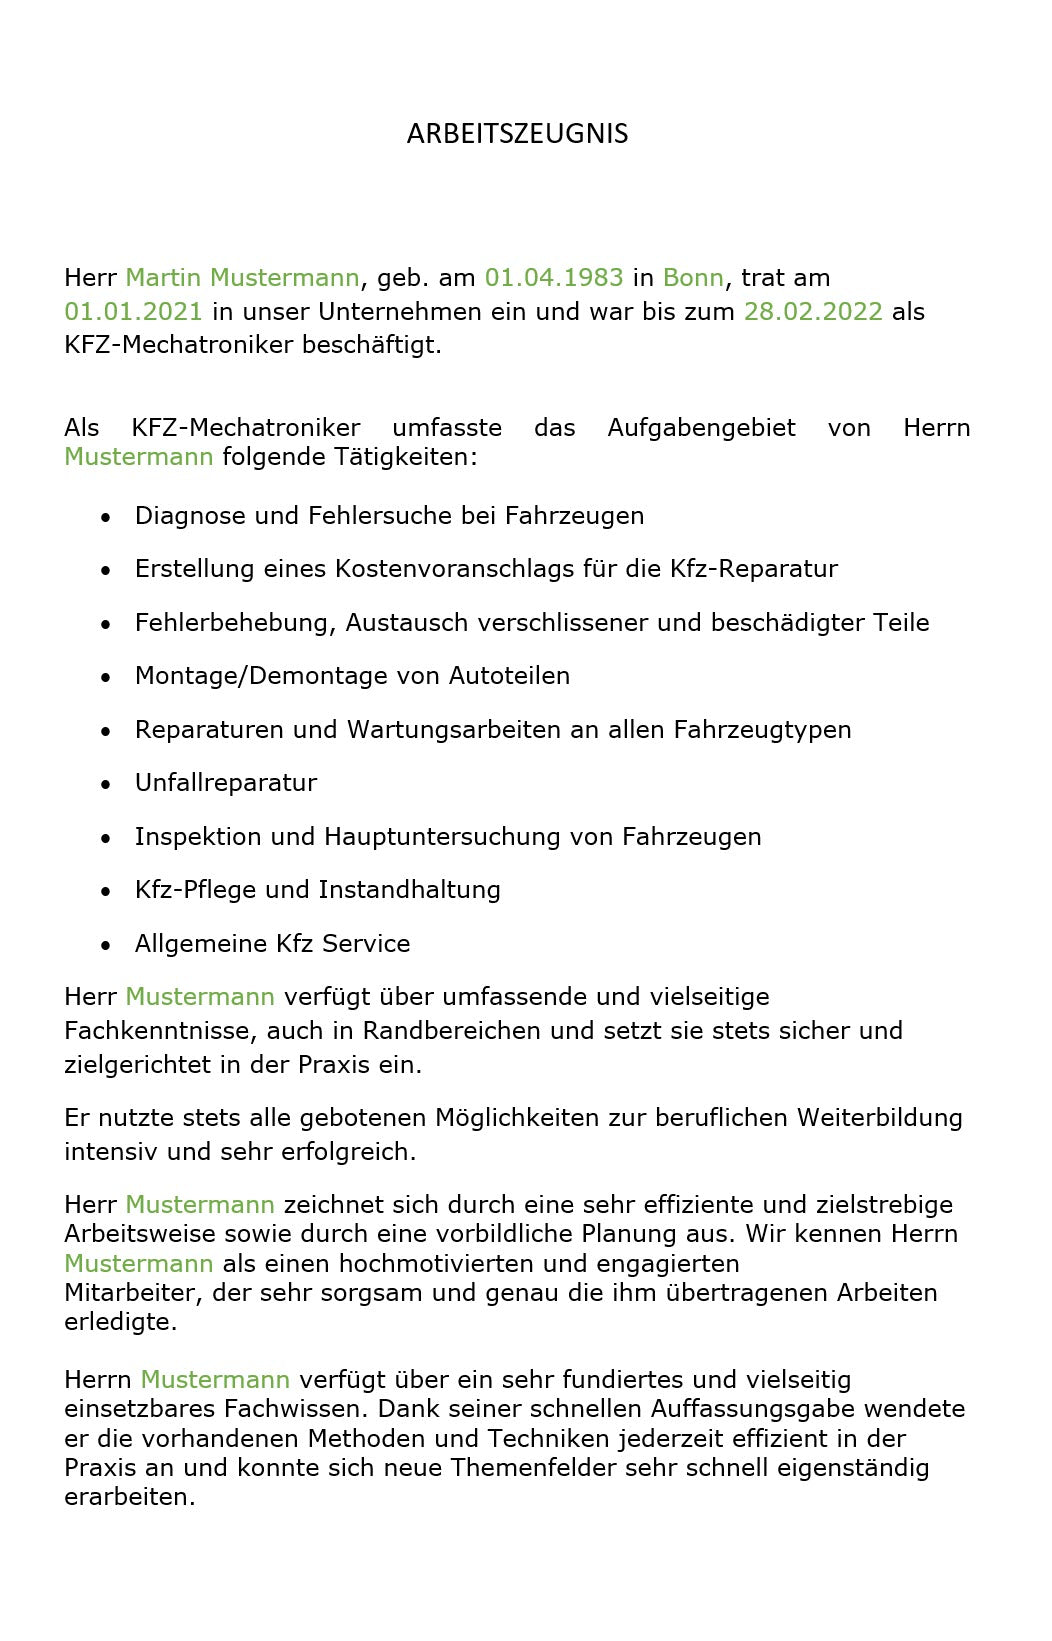 Arbeitszeugnis KFZ-Mechatroniker Vorlage m/w/d - Simply Download